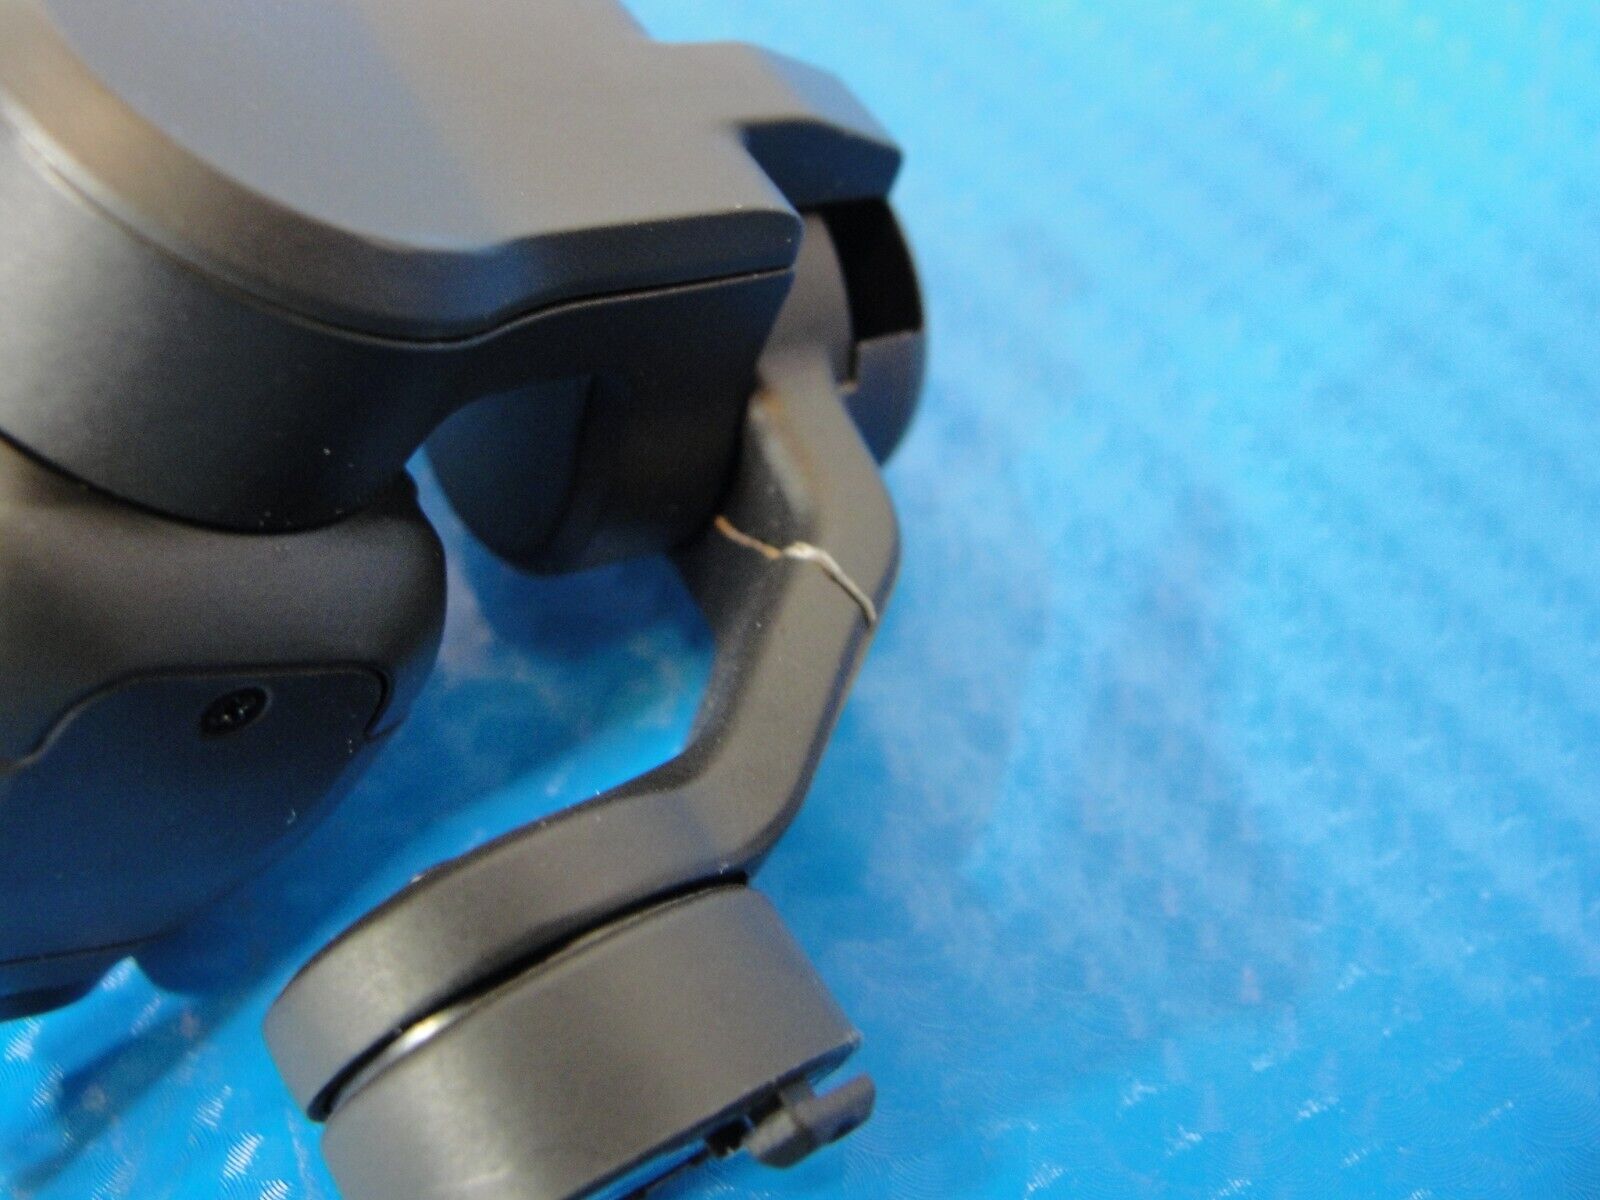 DJI Mini 3 PRO Drone Genuine Camera Gimbal Replacement /READ